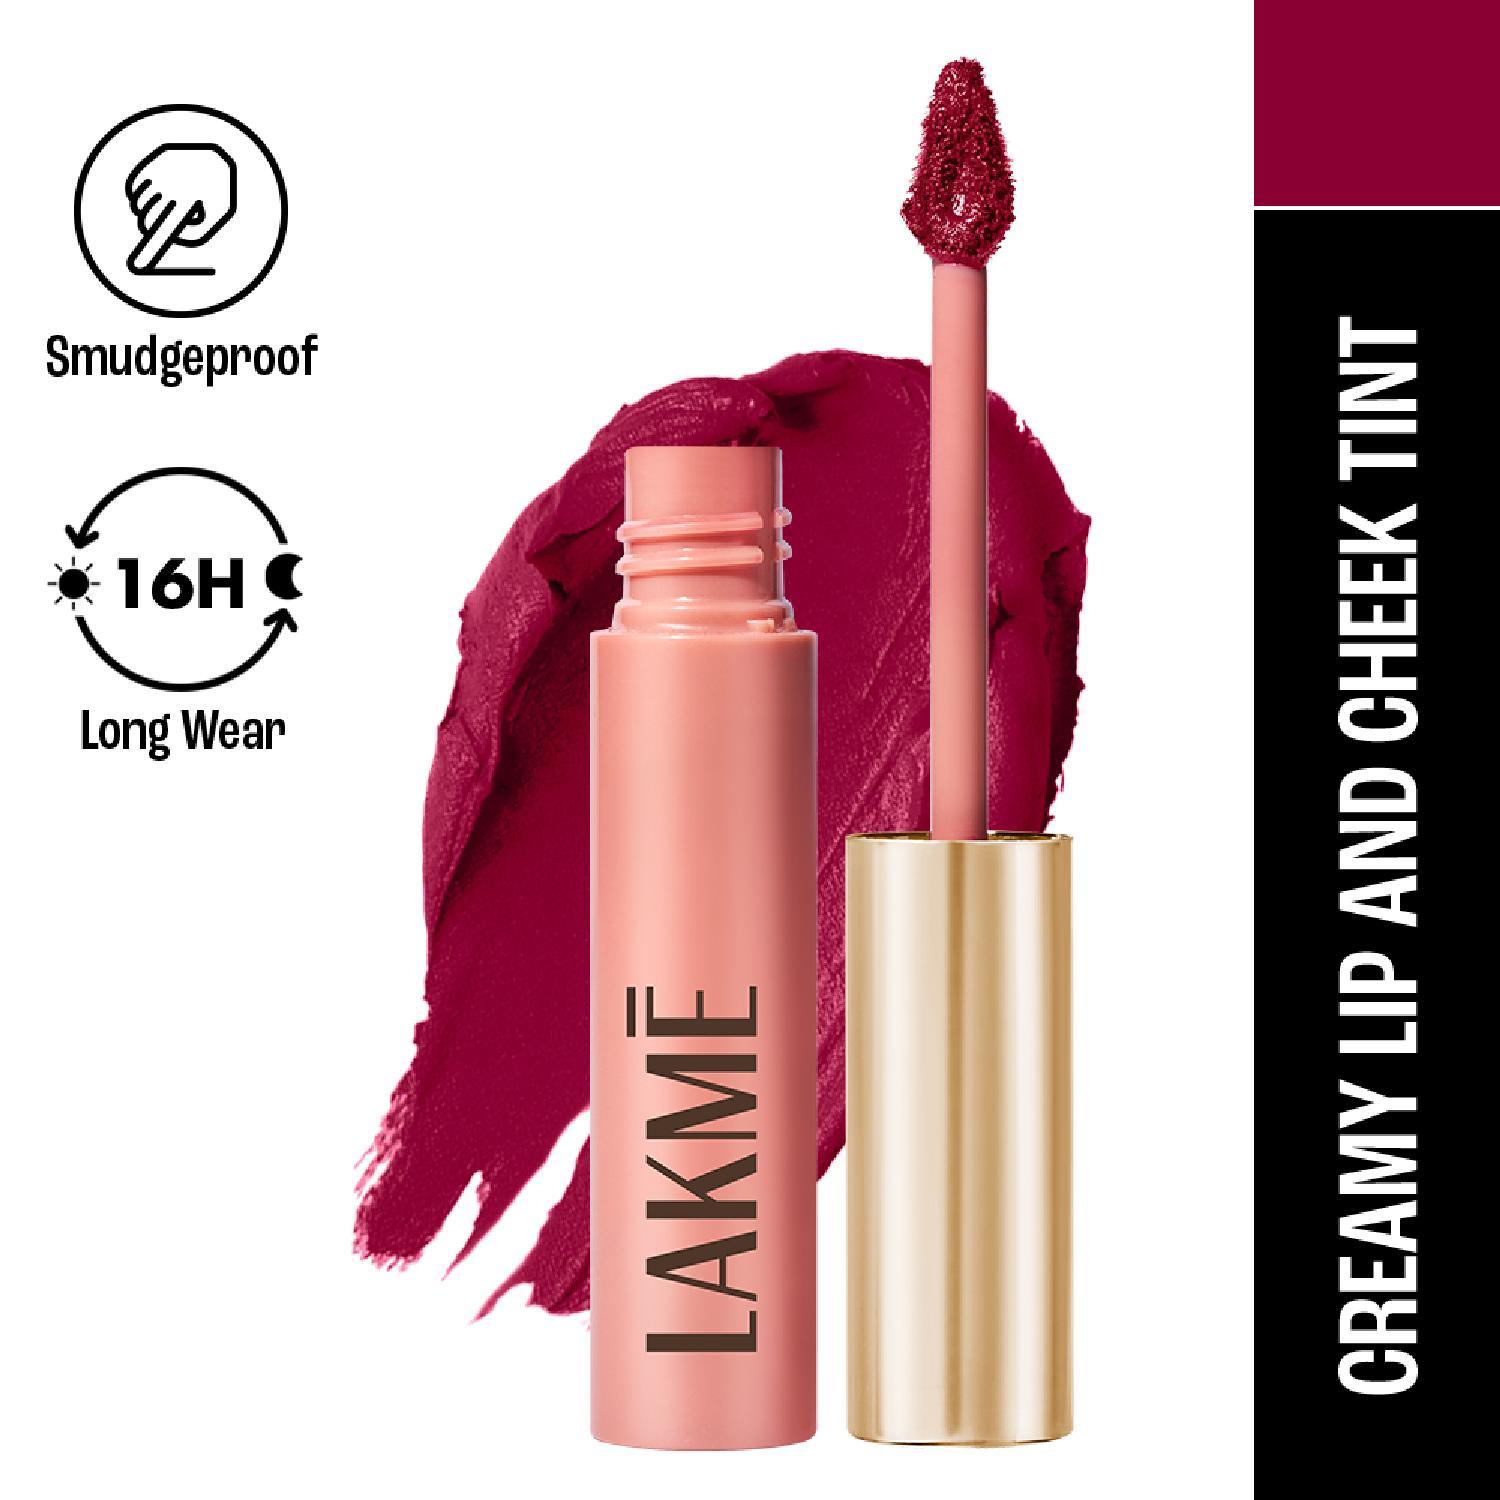 Lakme | Lakme Double Duty Lip & Cheek Mousse Matte Lipstick & Soft Blush, Rosy Plum (9 g)